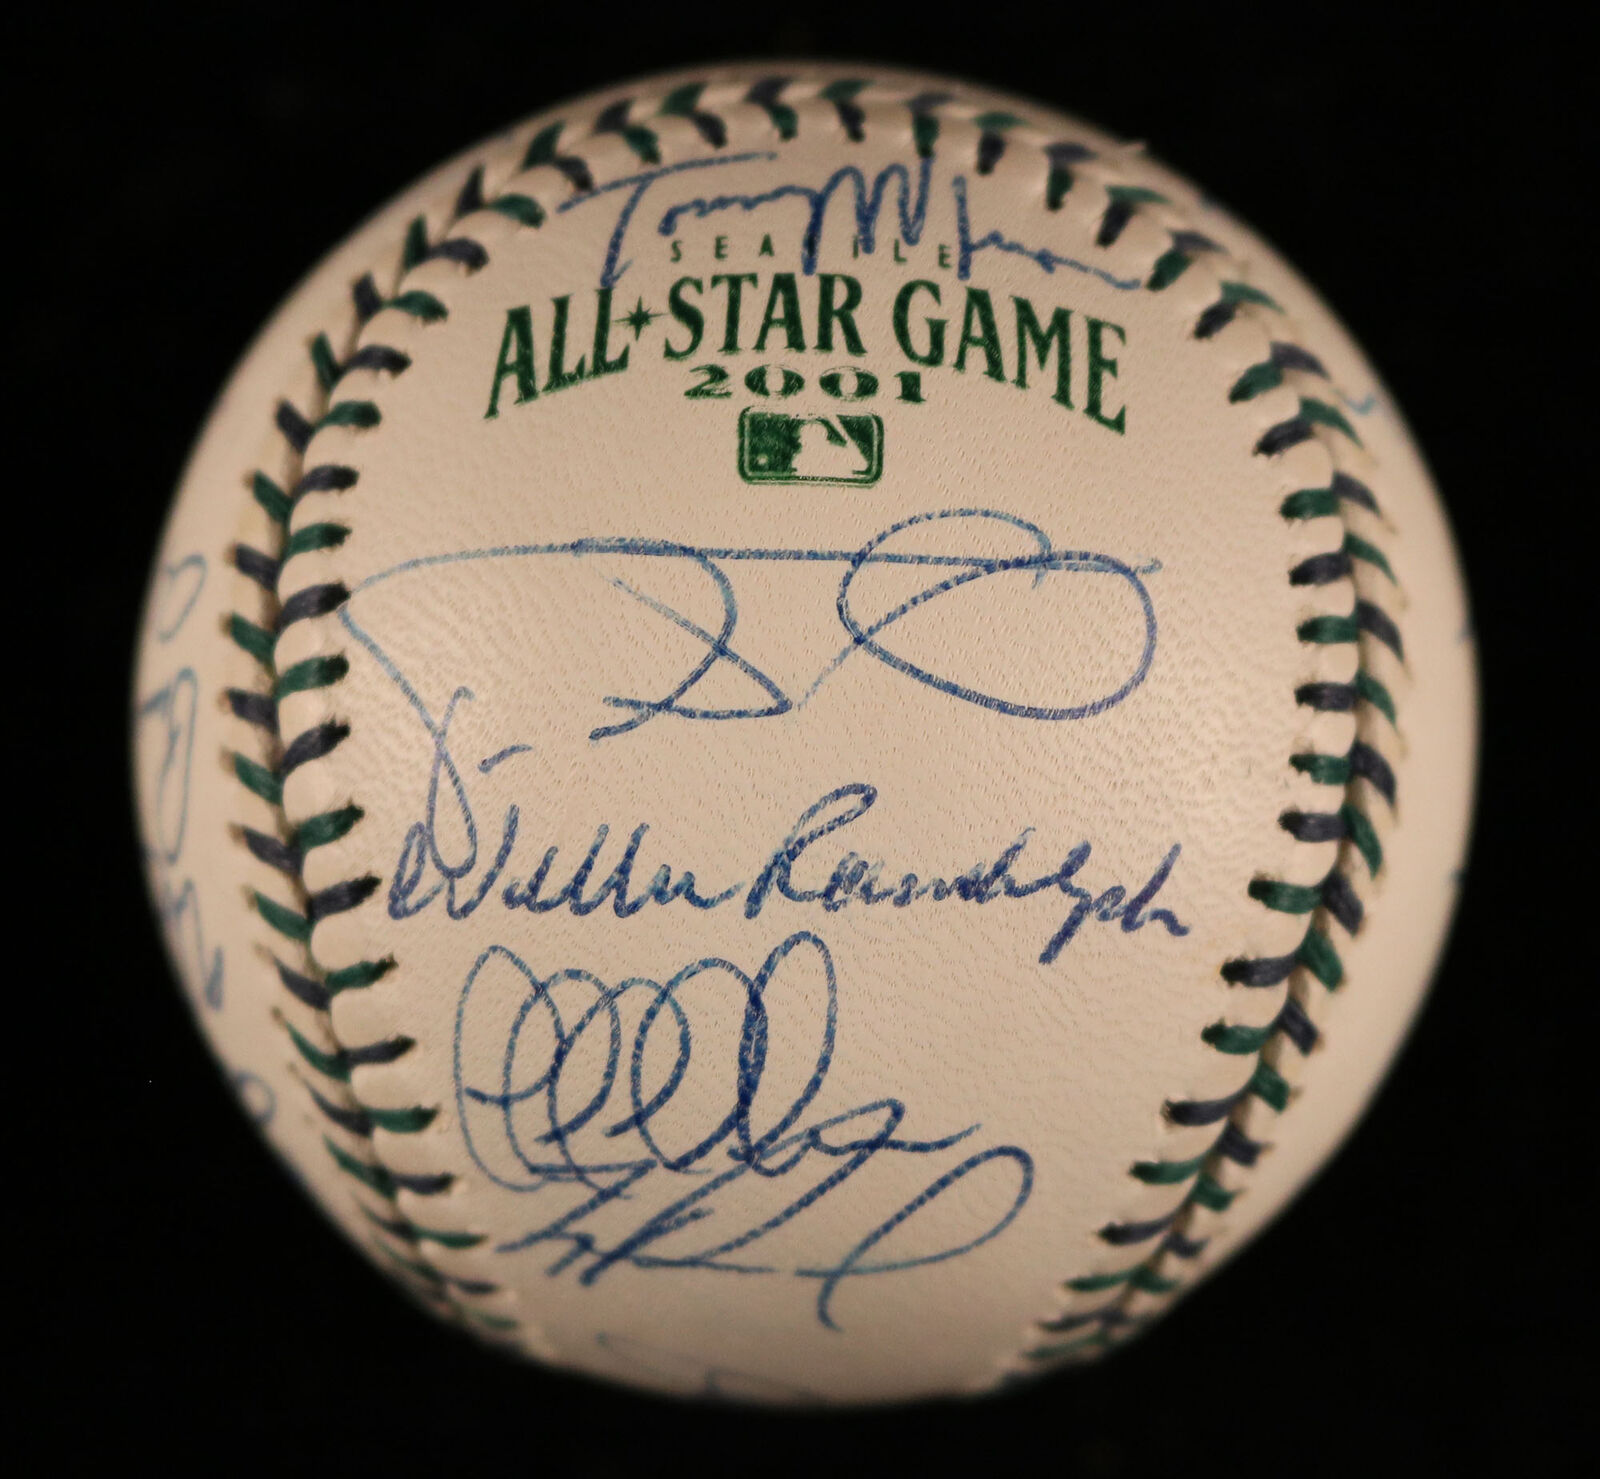 2001 All Star Team Signed All Star Game Baseball Derek Jeter Arod 25 Sig PSA DNA